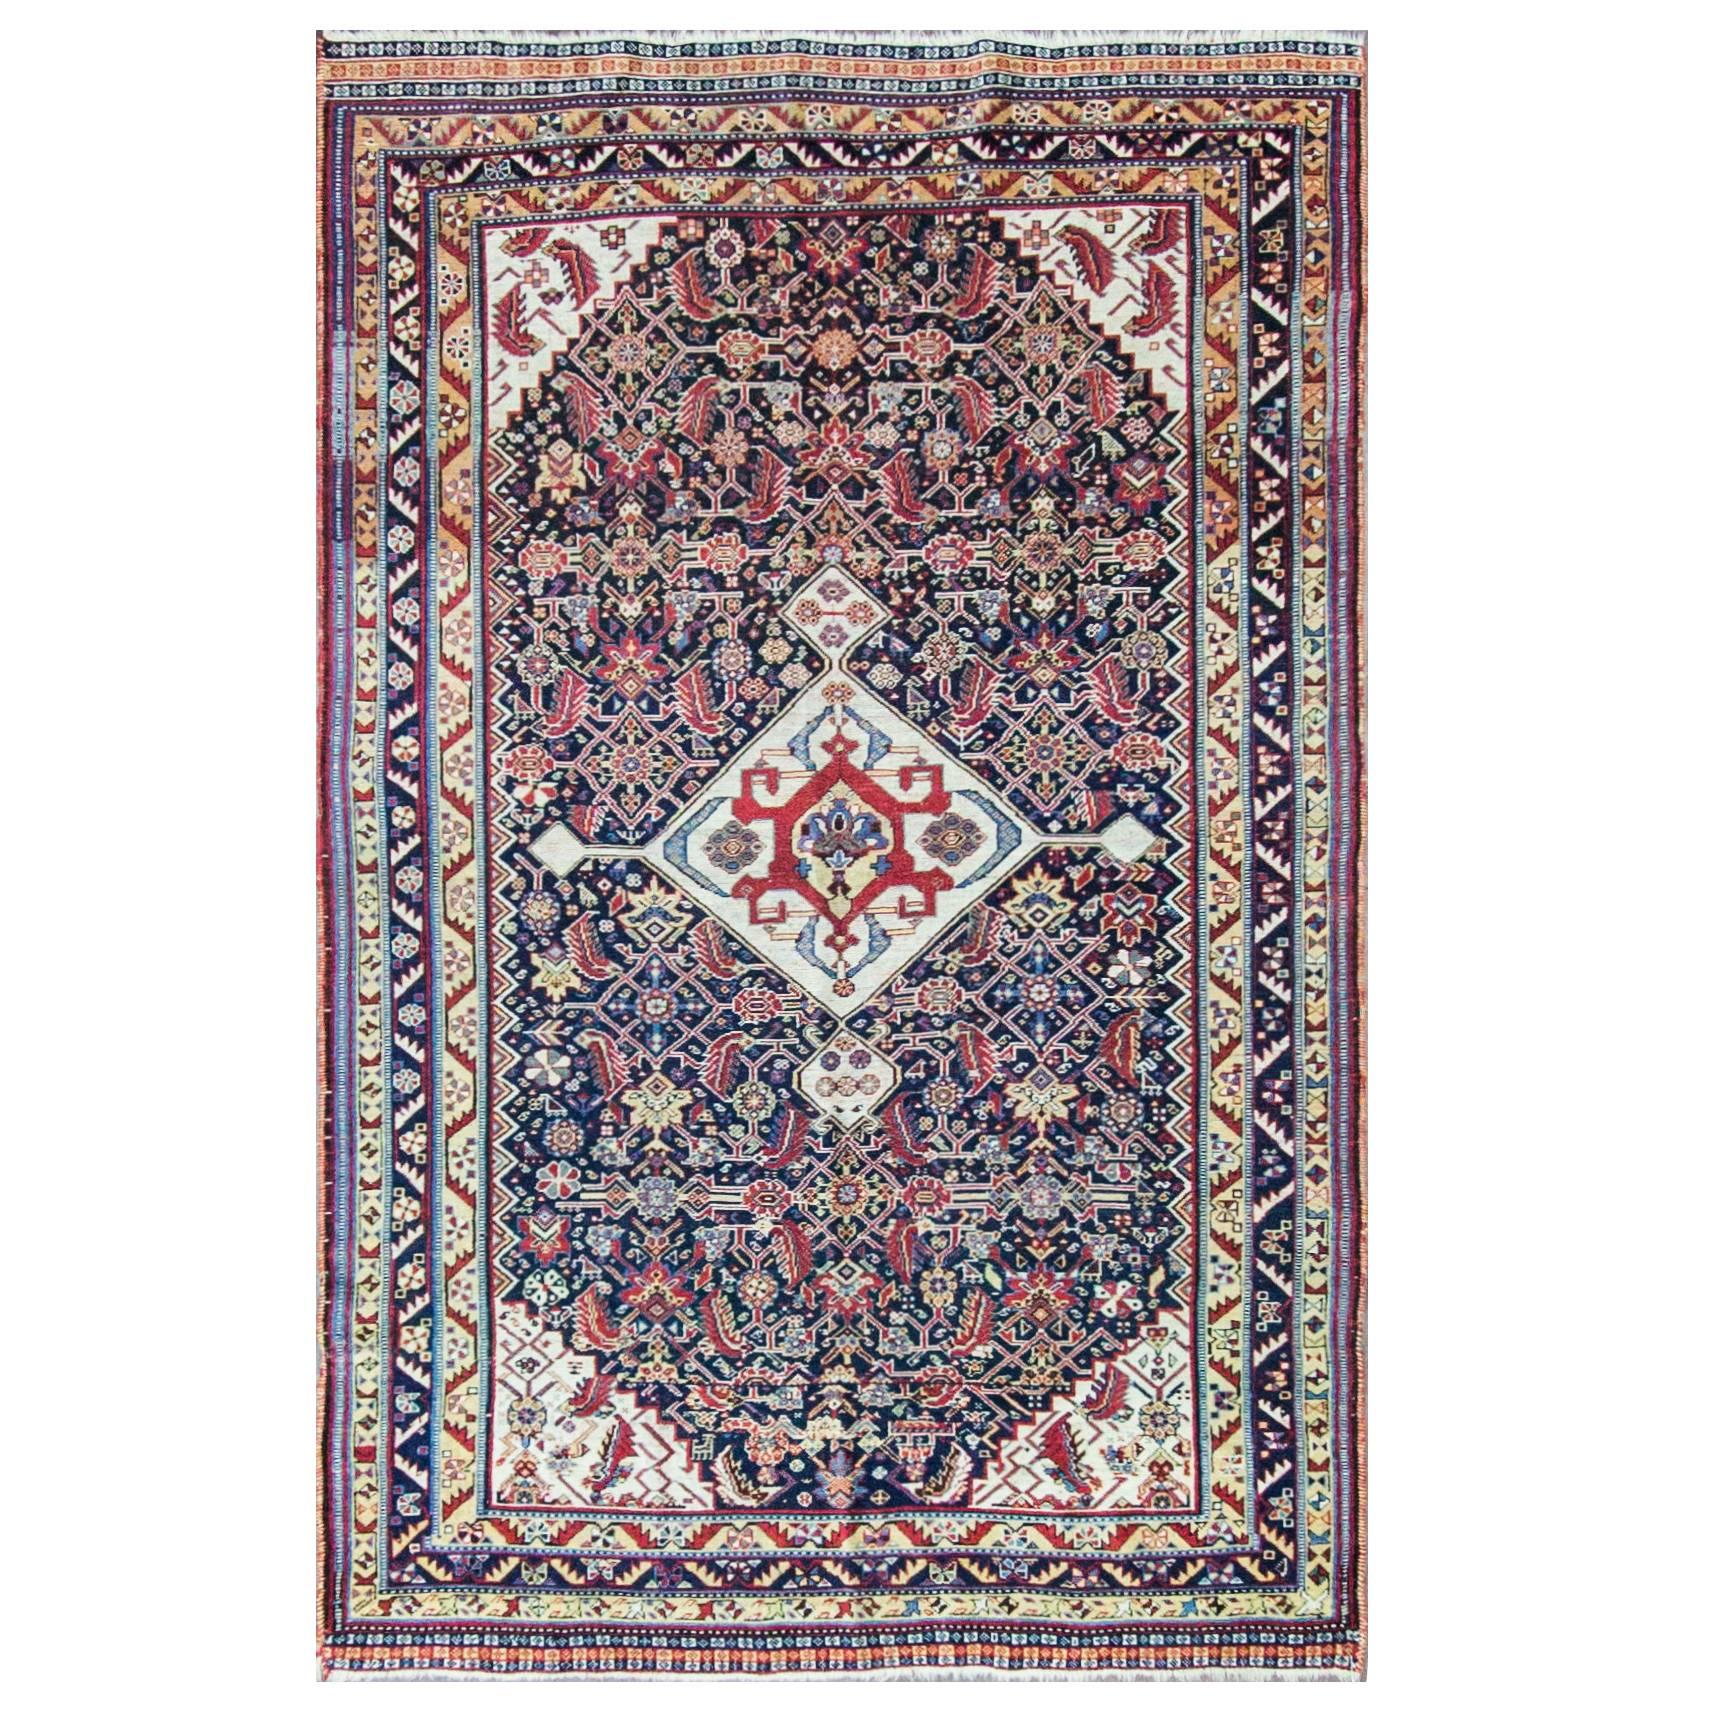  Antiker persischer Qashqai-Teppich, fein